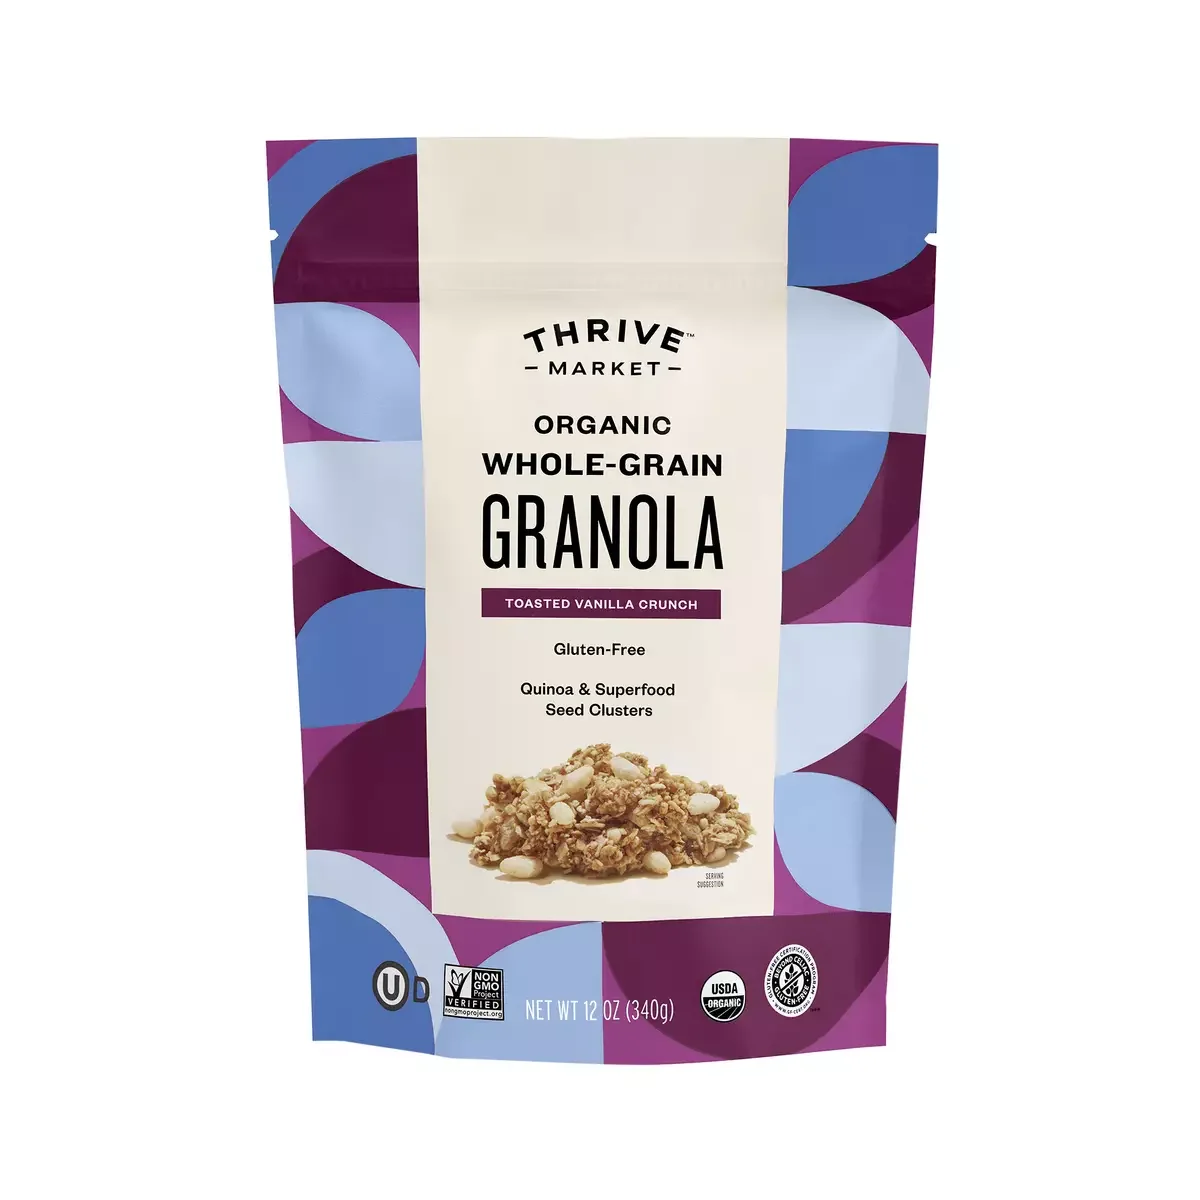 Organic Whole-Grain Granola, Toasted Vanilla Crunch